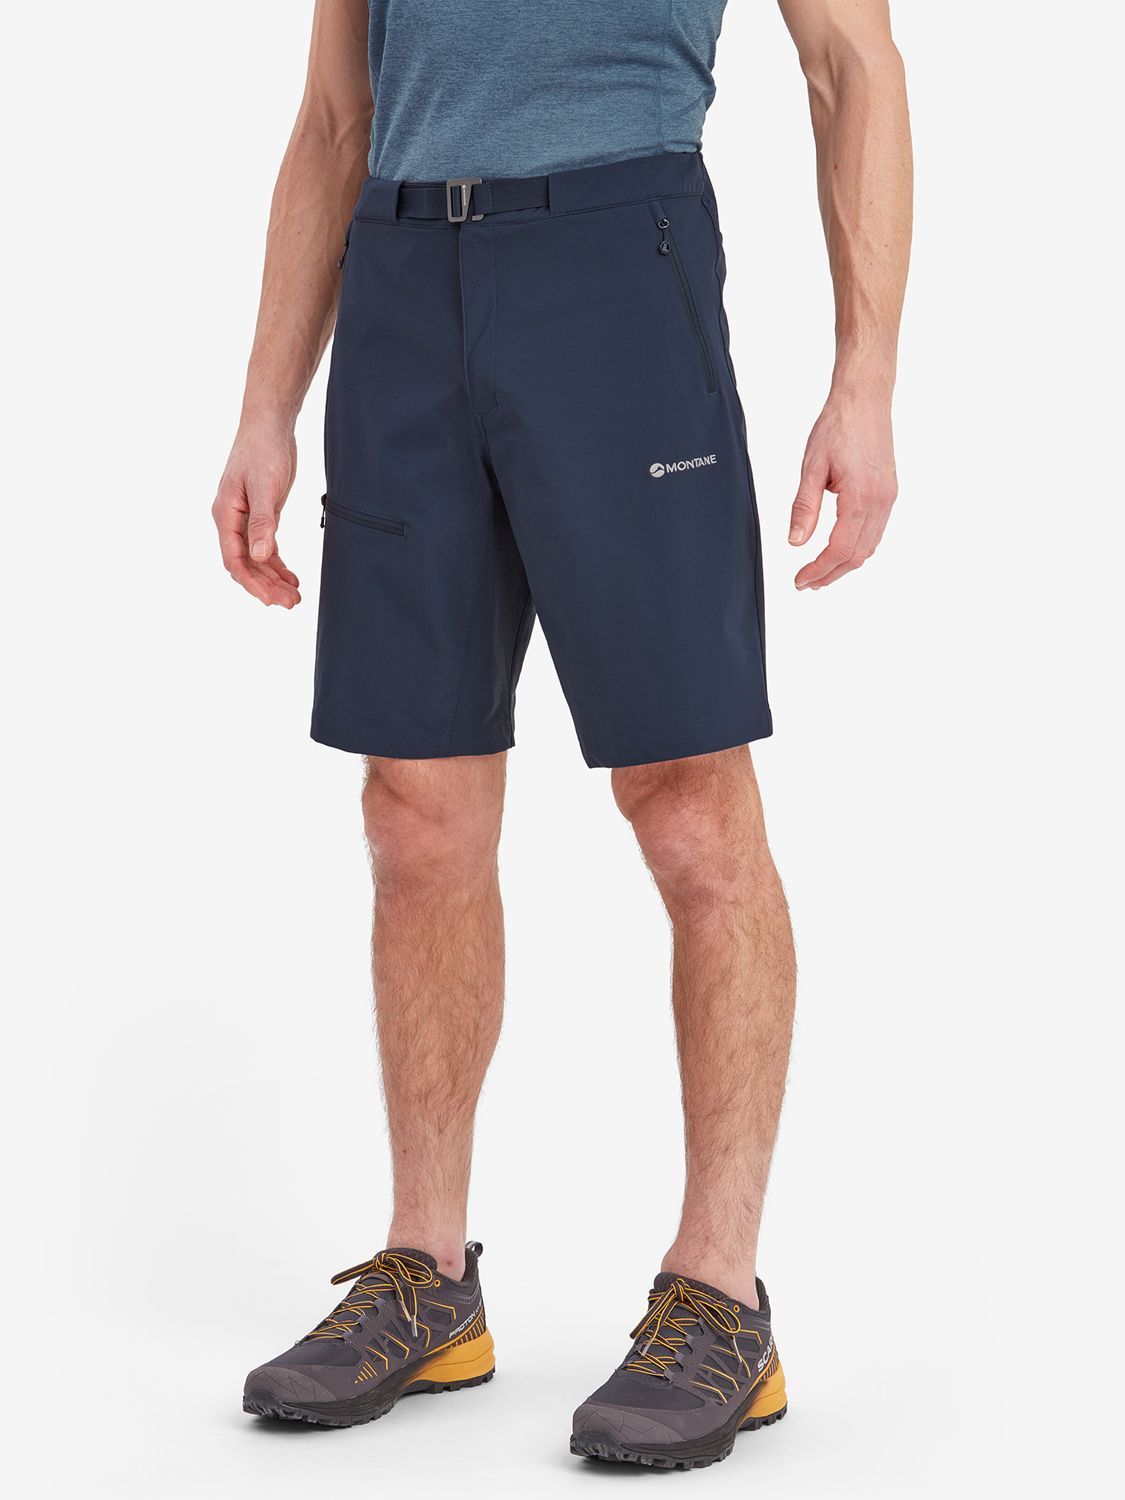 Montane Tenacity Shorts, Eclipse Blue, S